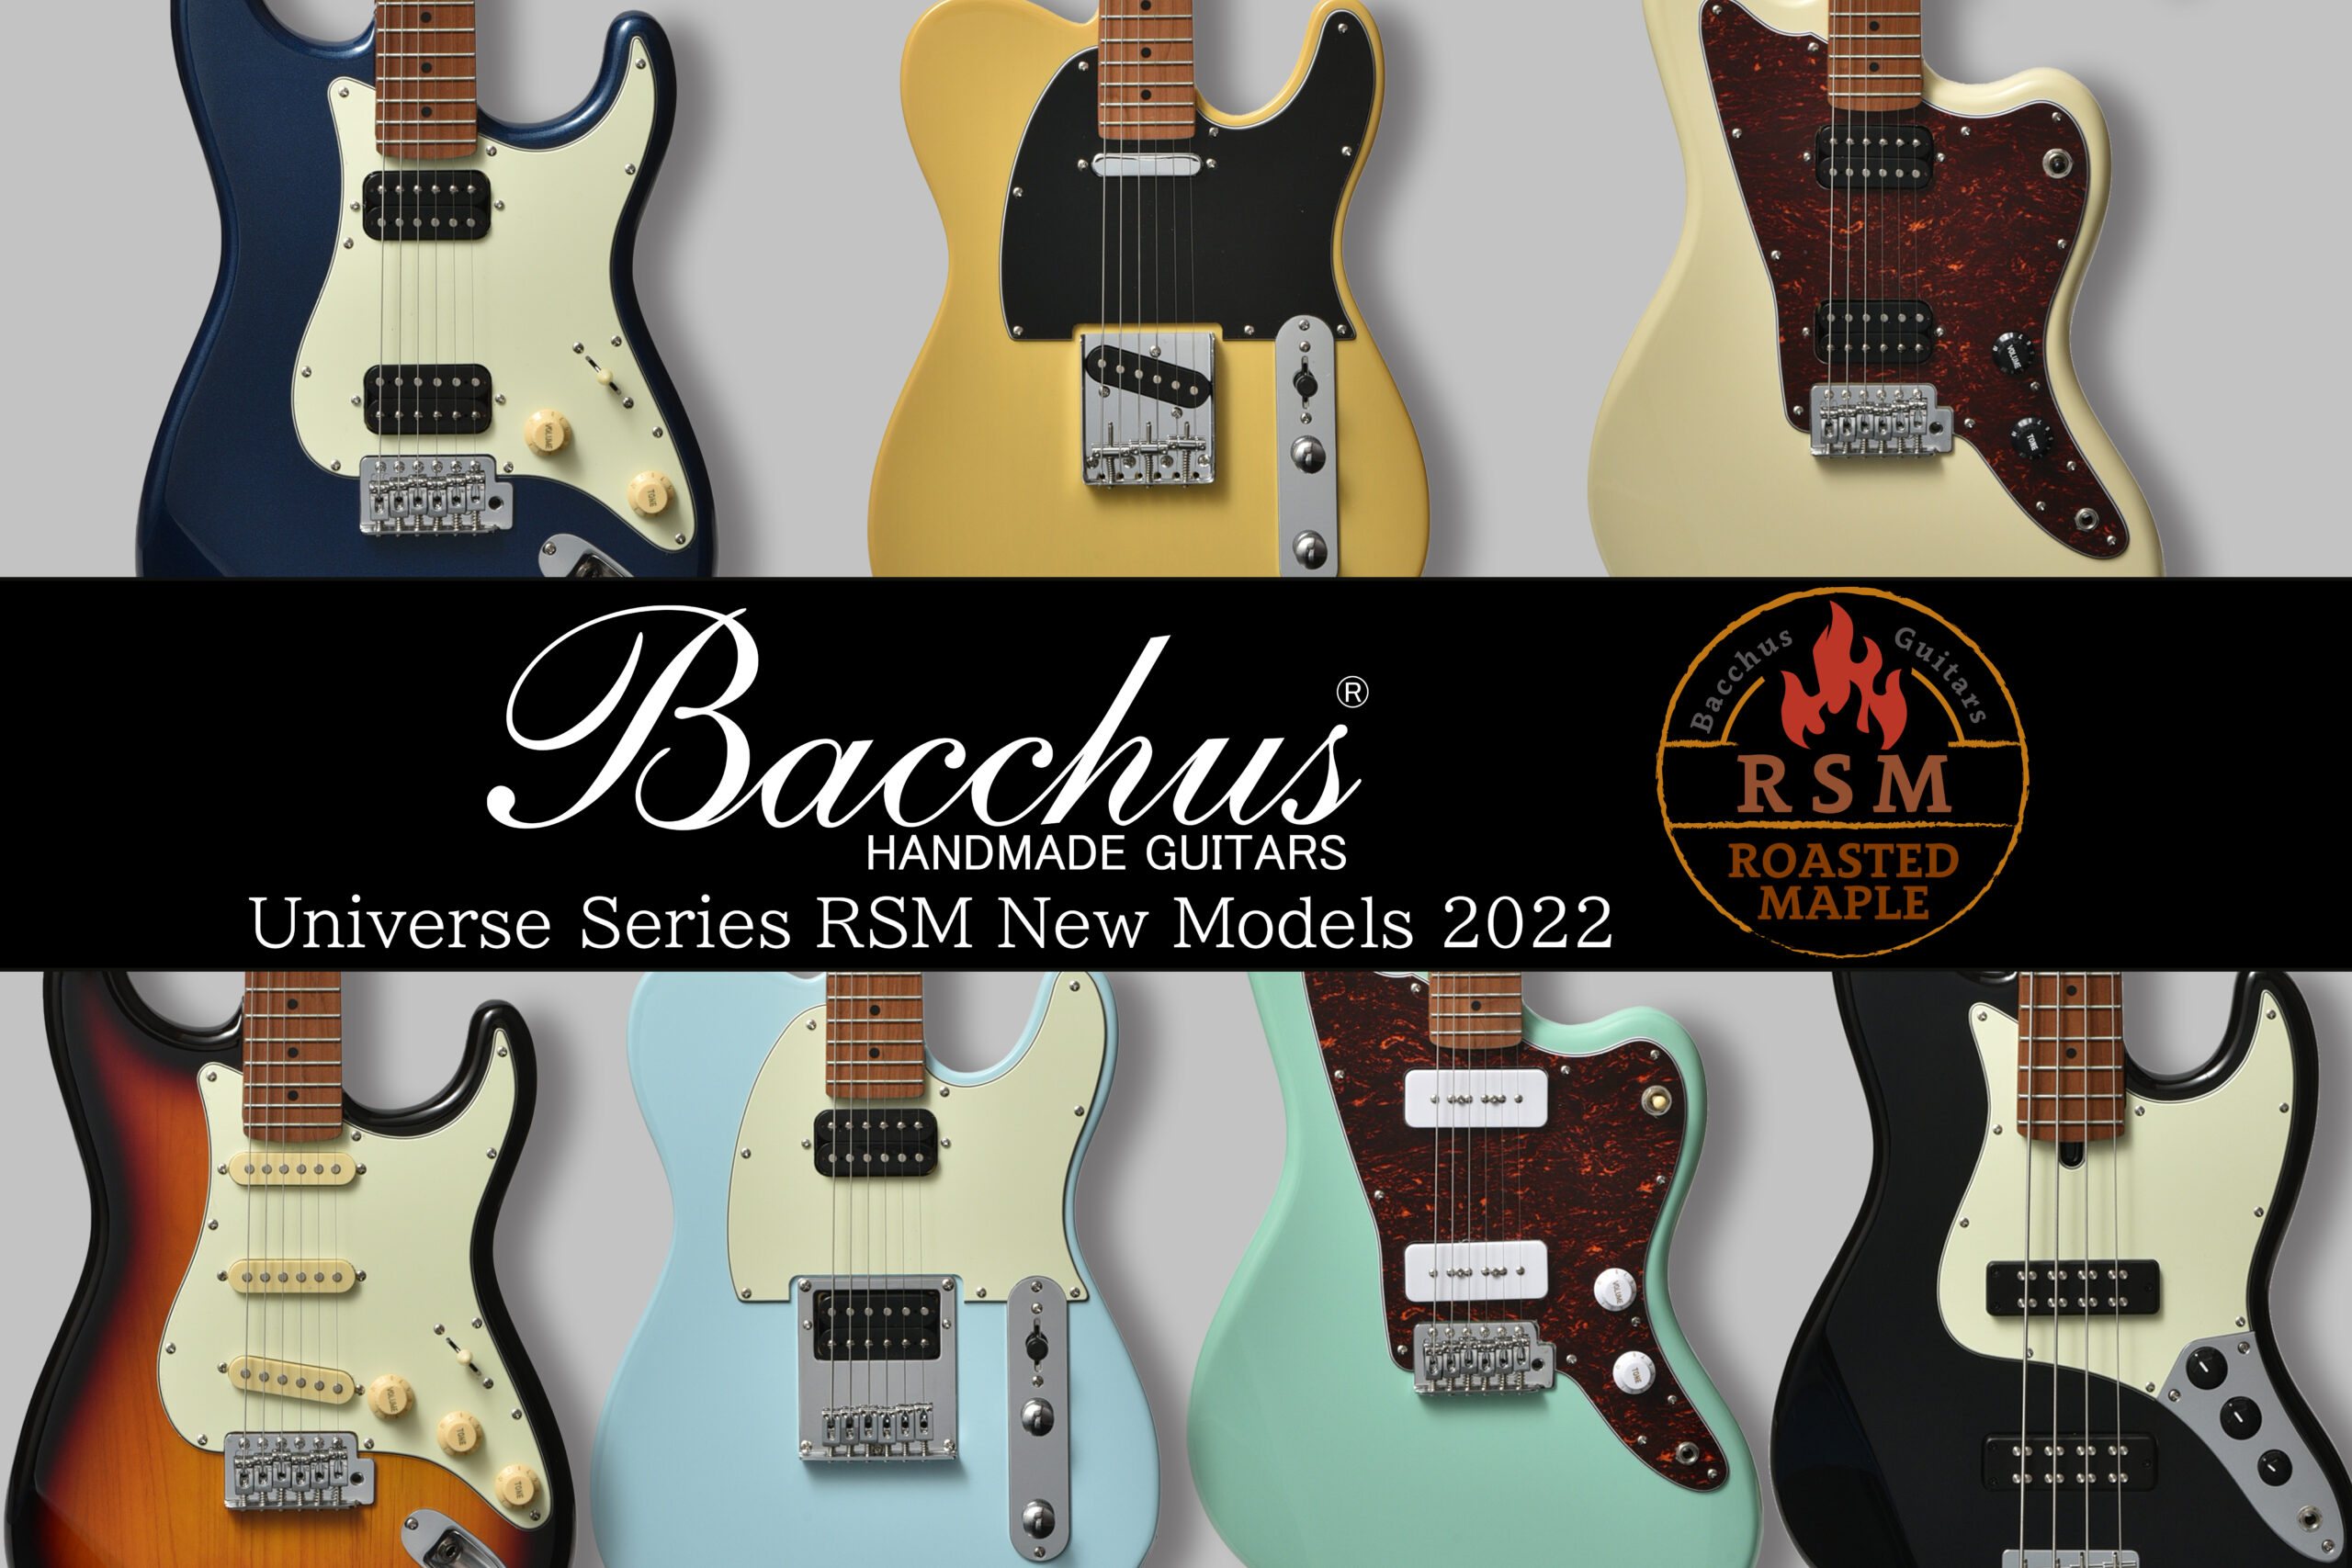 New Models】Bacchus Global Series RSM 2022 | Deviser ｜株式会社 